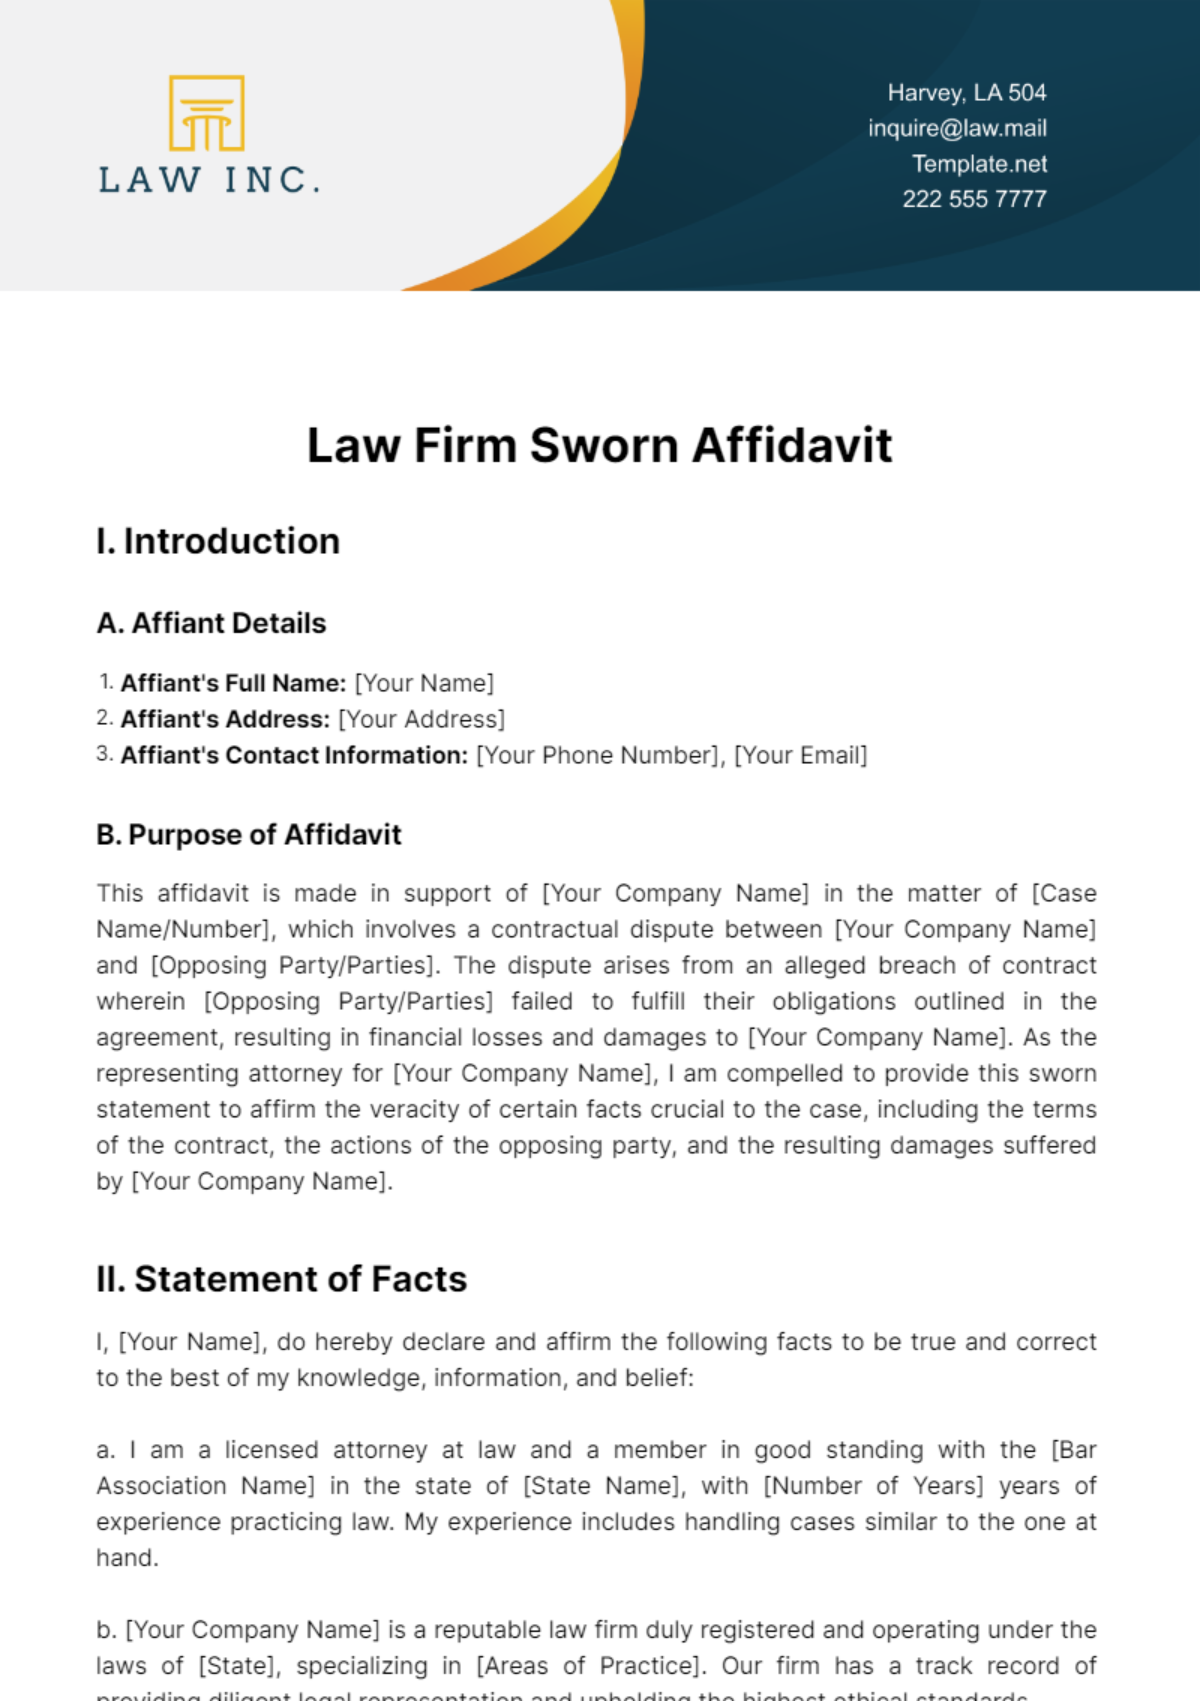 Law Firm Sworn Affidavit Template